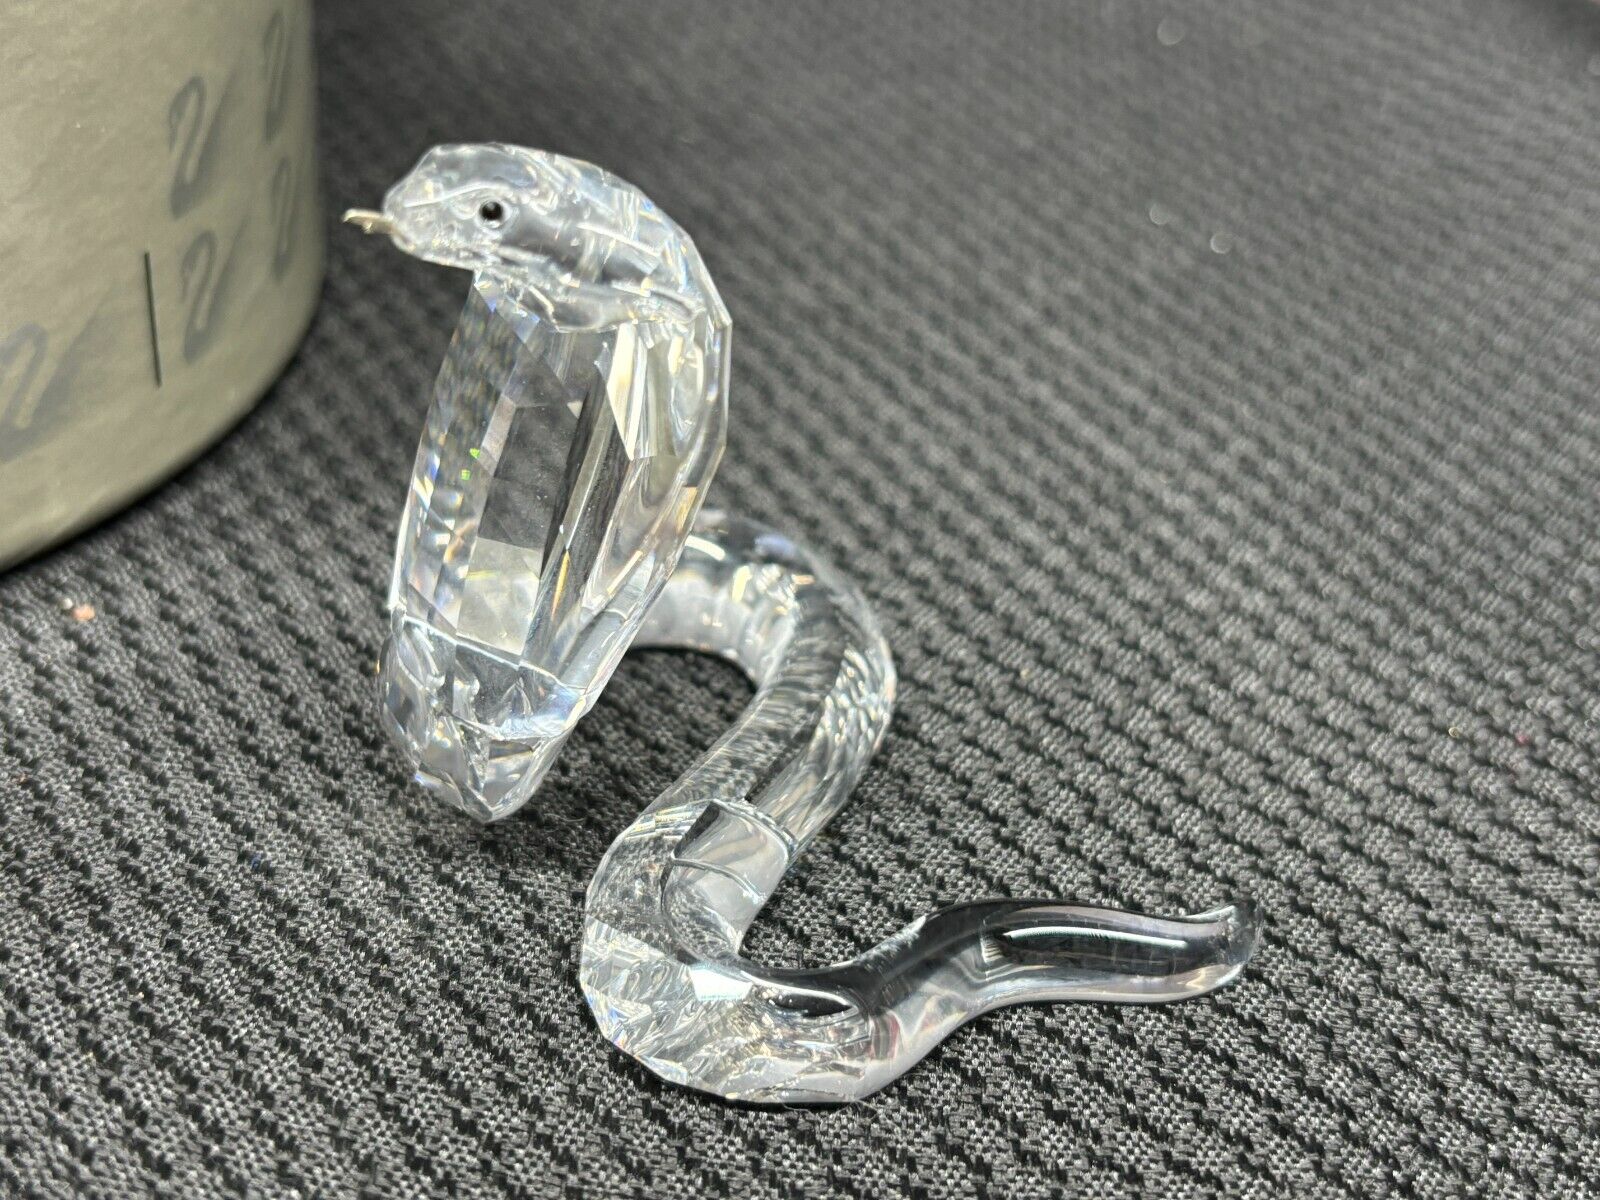 Swarovski Crystal Figurine 